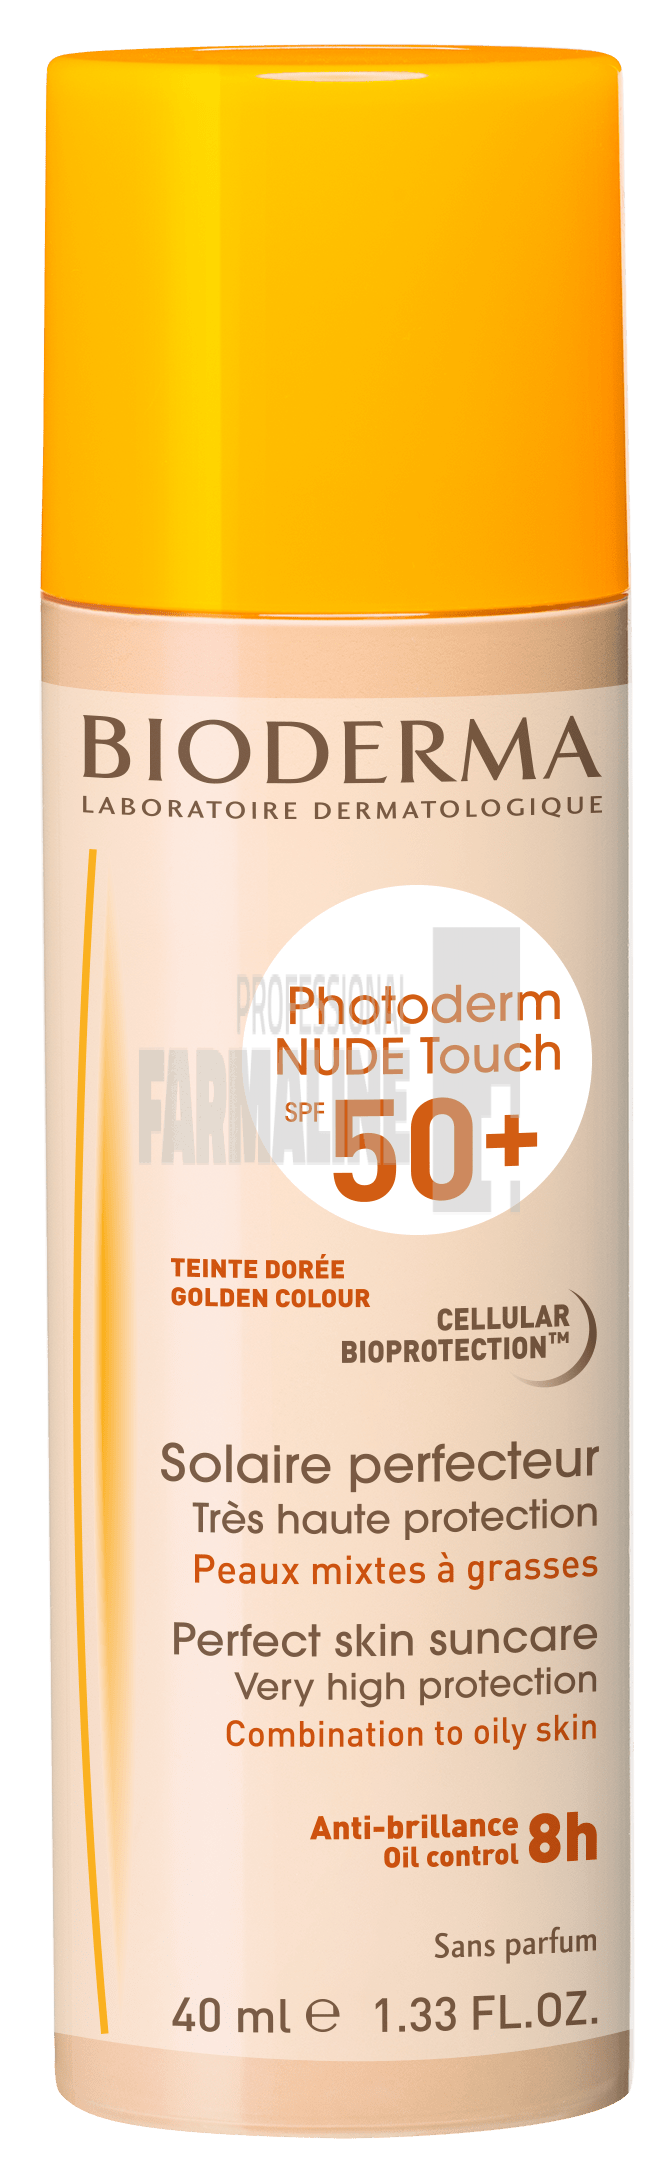 Bioderma Photoderm Nude Touch SPF50+ Doree 40 ml